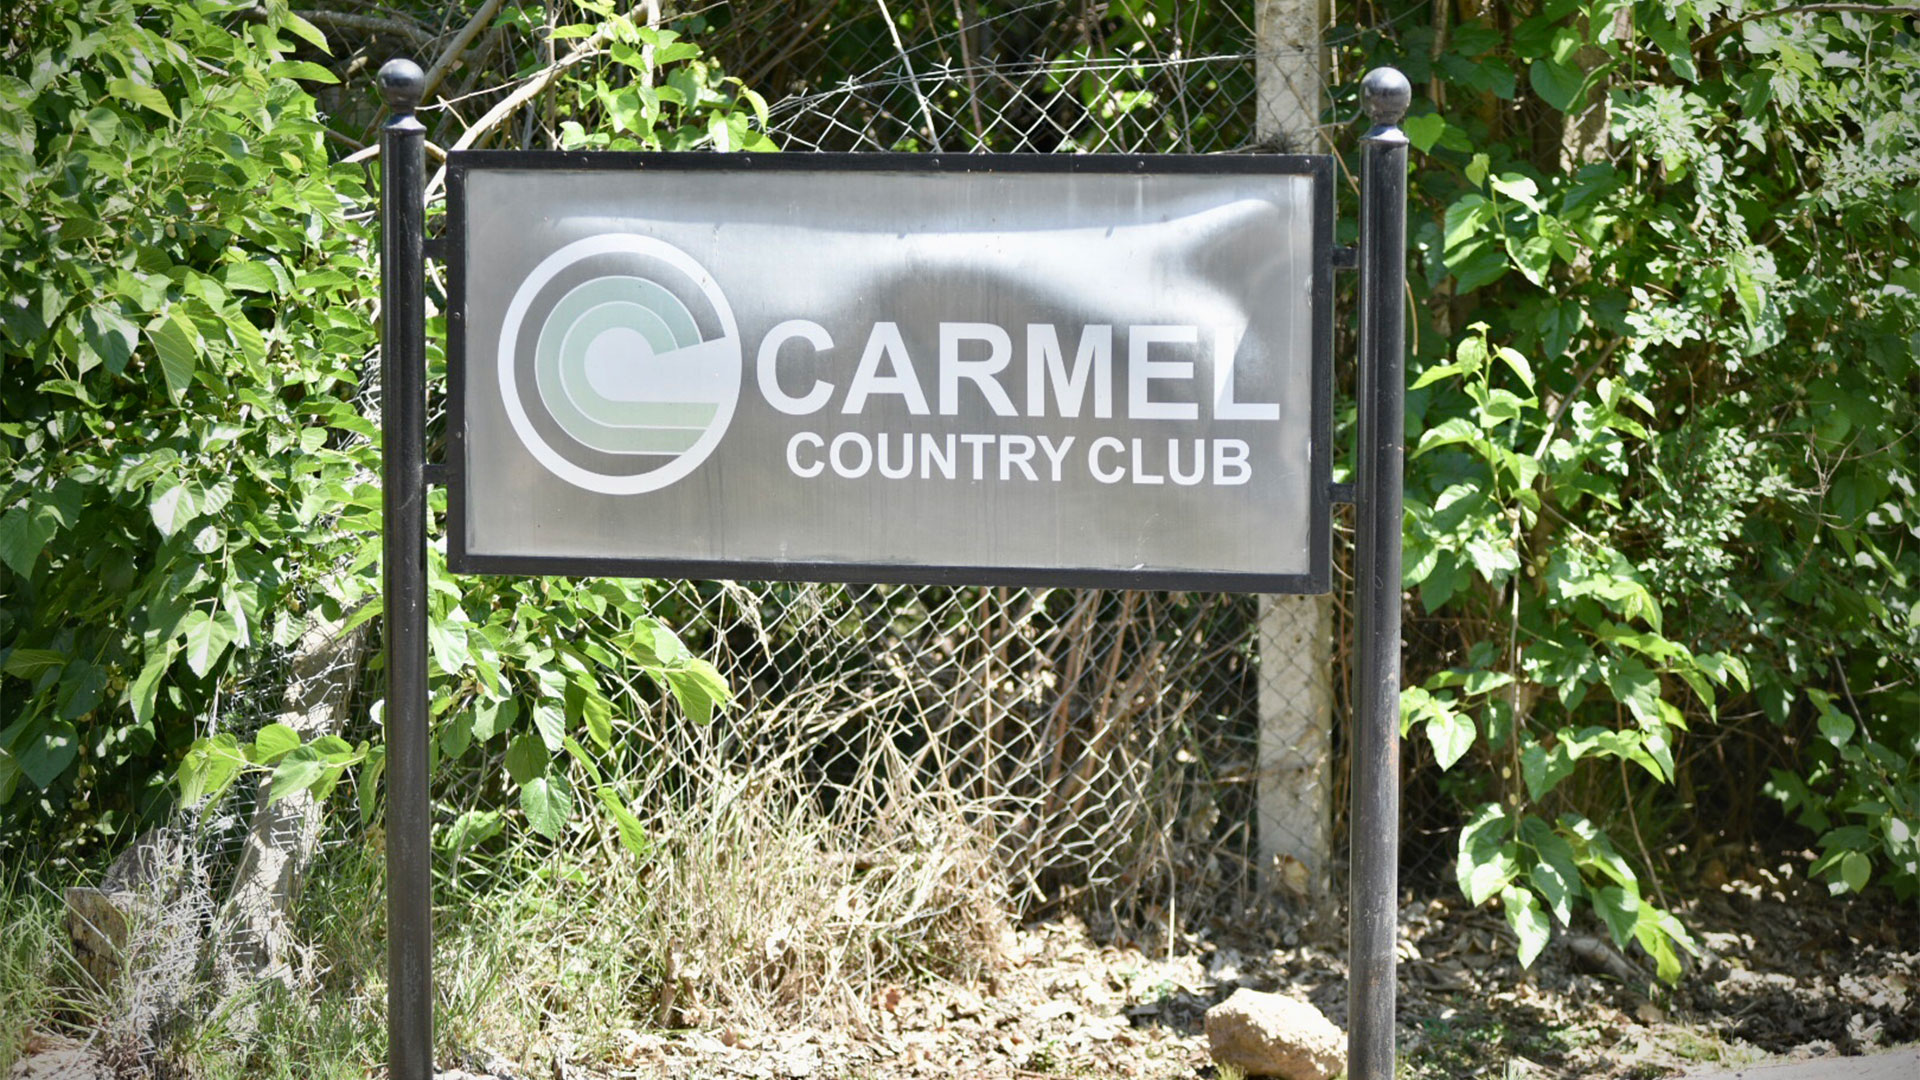 El crimen ocurrió en el country Carmel en 2002 (Ariel Torres)